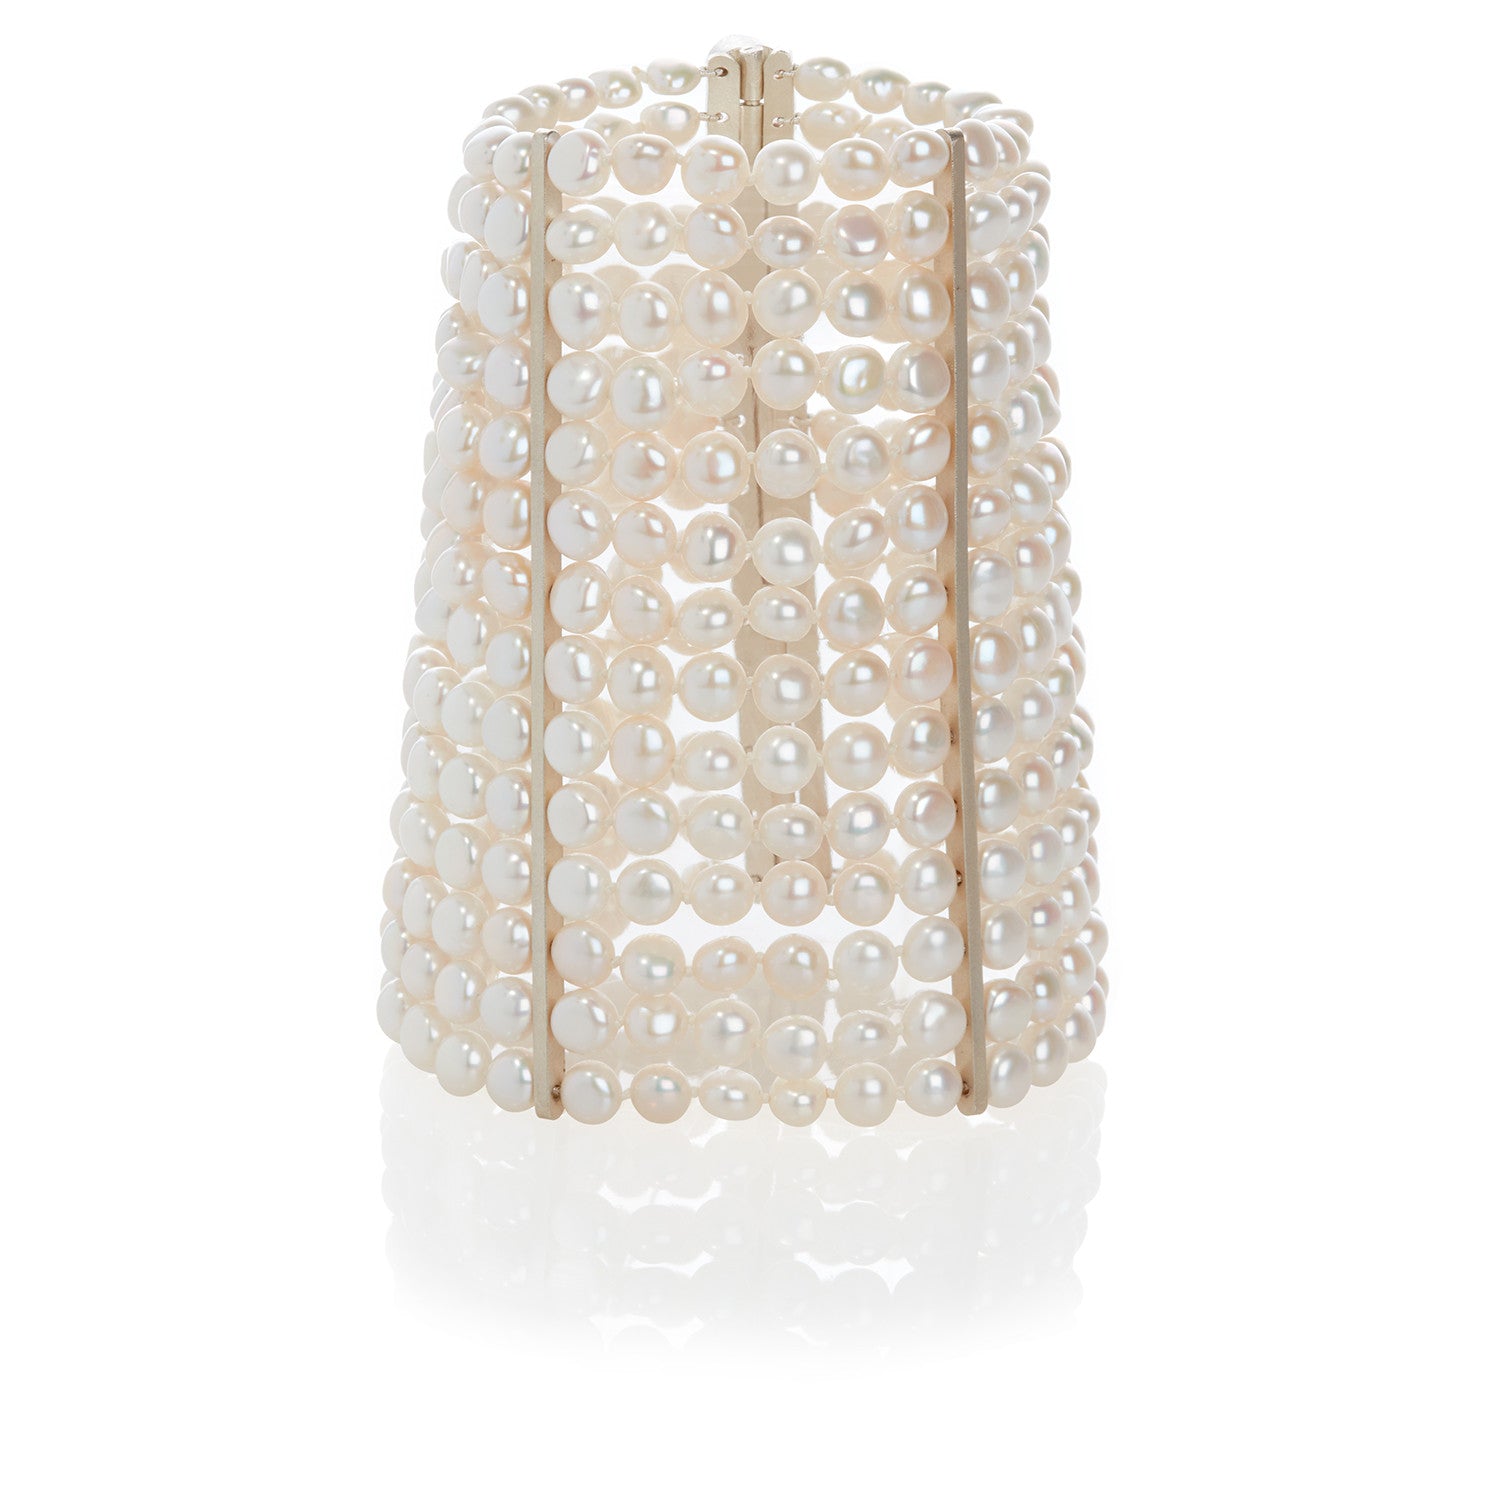 Multistrand Cultured Freshwater White Pearl Cuff Bracelet